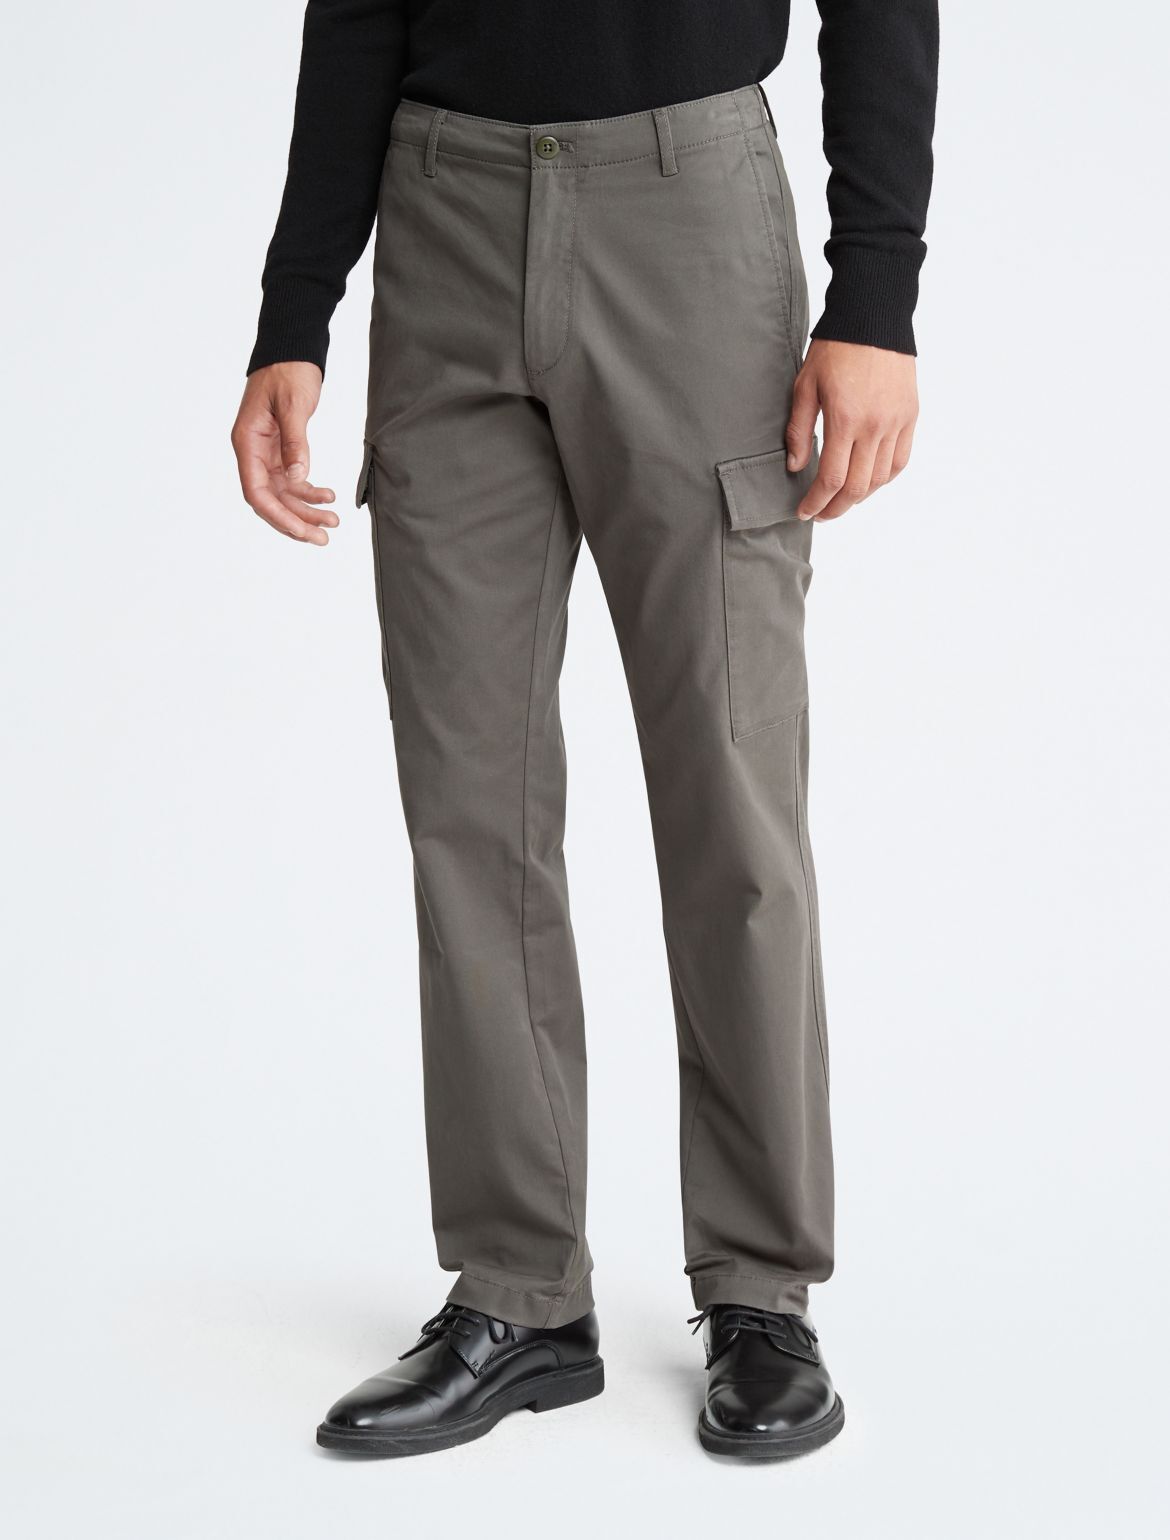 Calvin Klein Men's Twill Cargo Pants - Grey - 34W x 30L